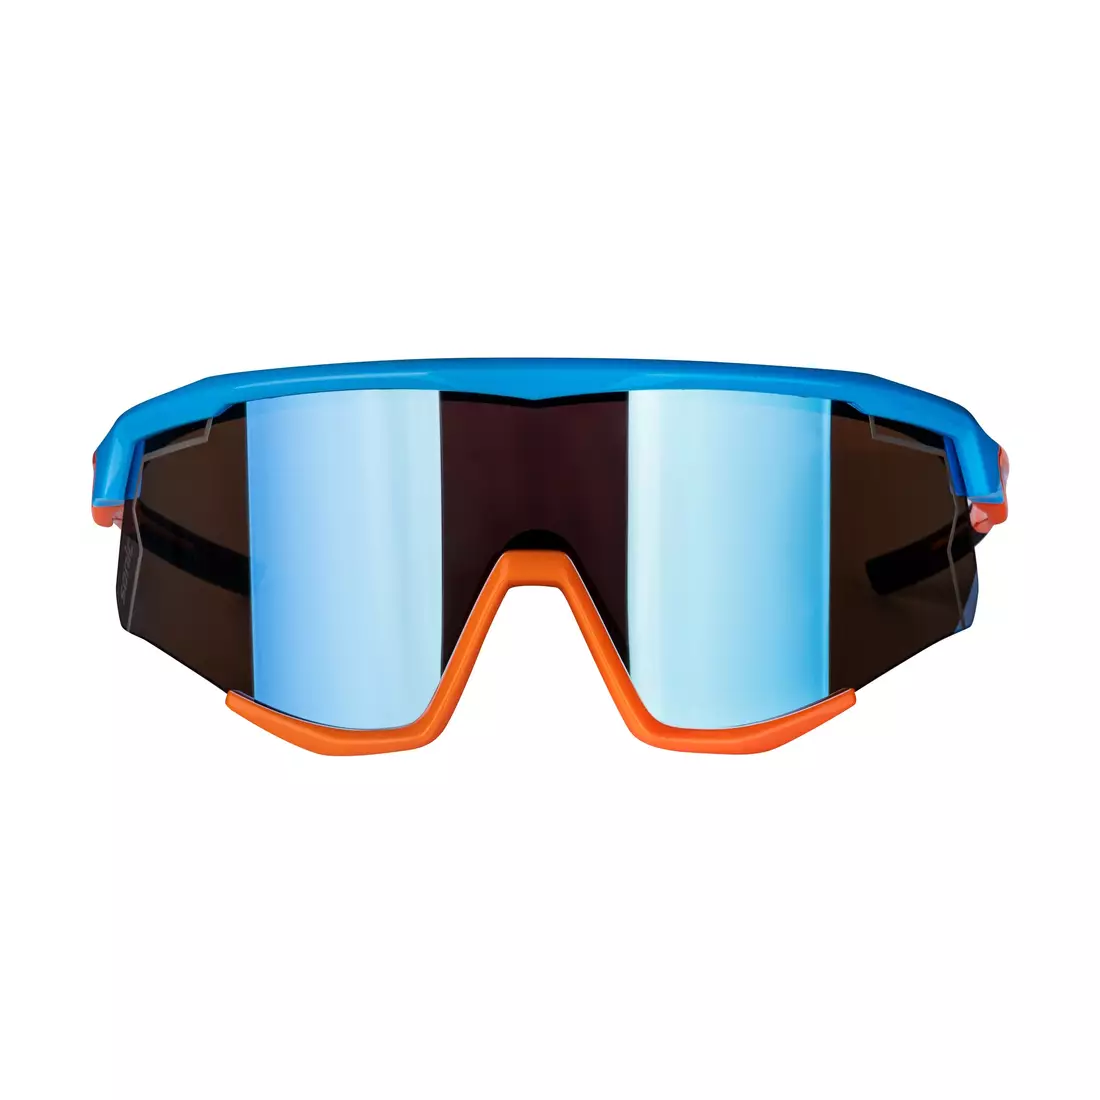 FORCE cycling / sports glasses SONIC, blue-orange, 910955